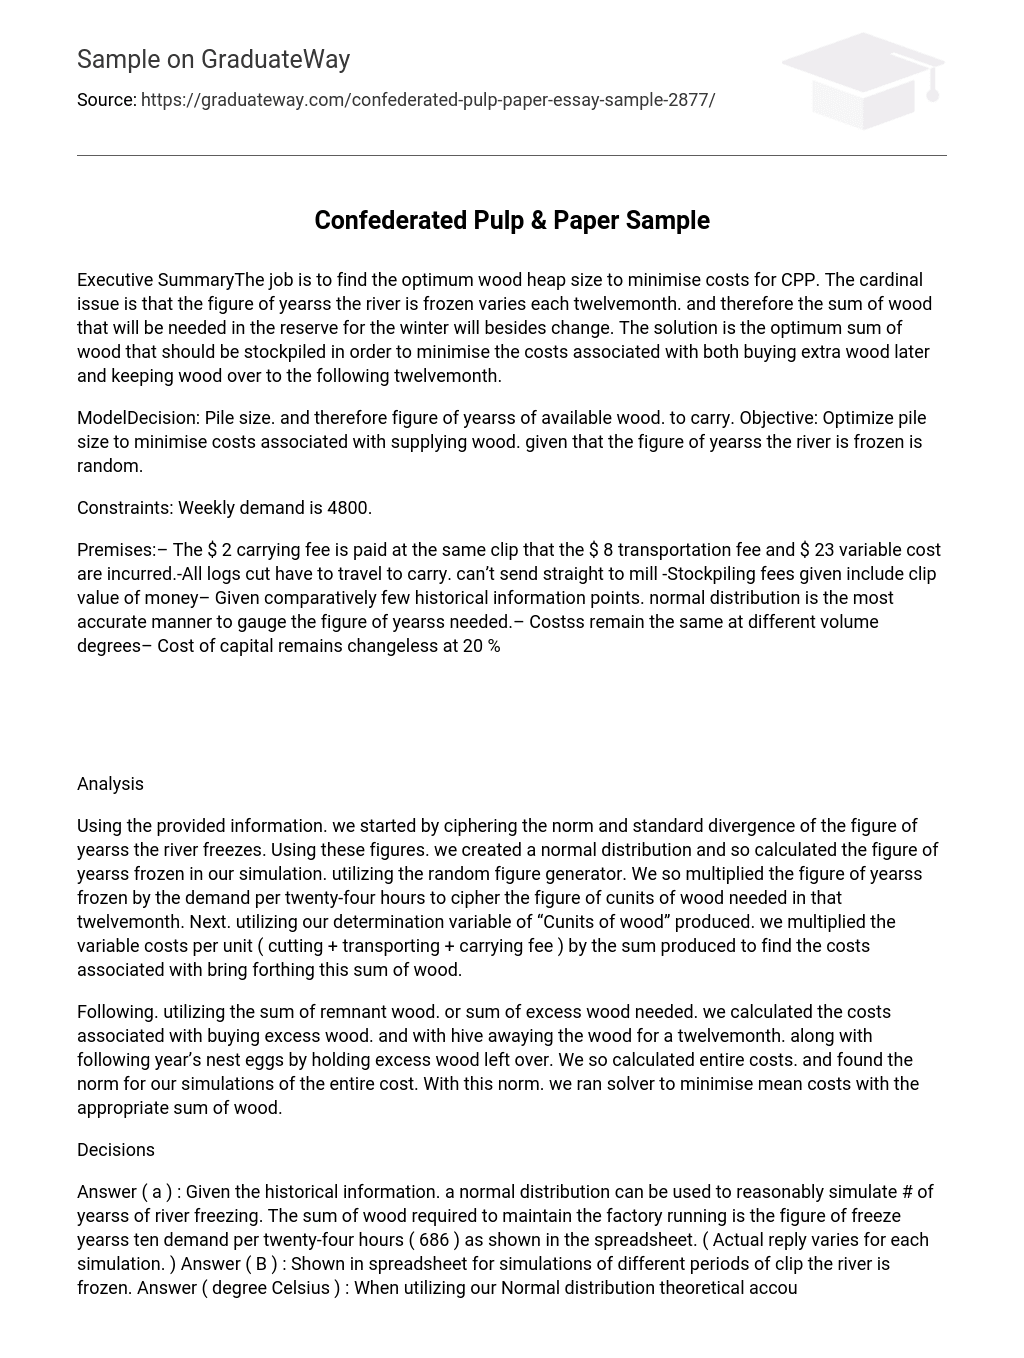 Confederated Pulp & Paper Sample